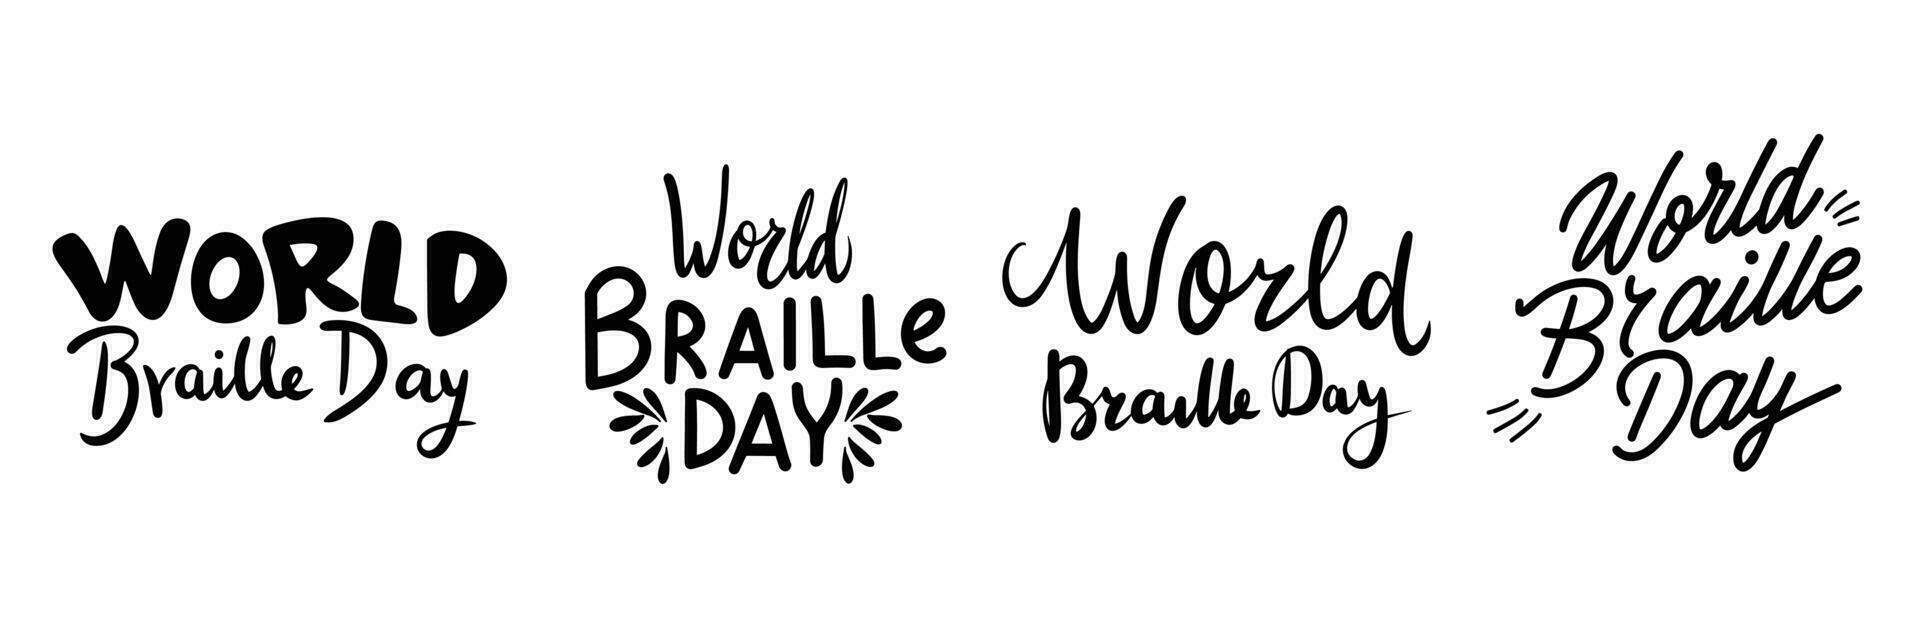 reeks van wereld braille dag tekst spandoek. handschrift tekst wereld braille dag belettering. hand- getrokken vector kunst.